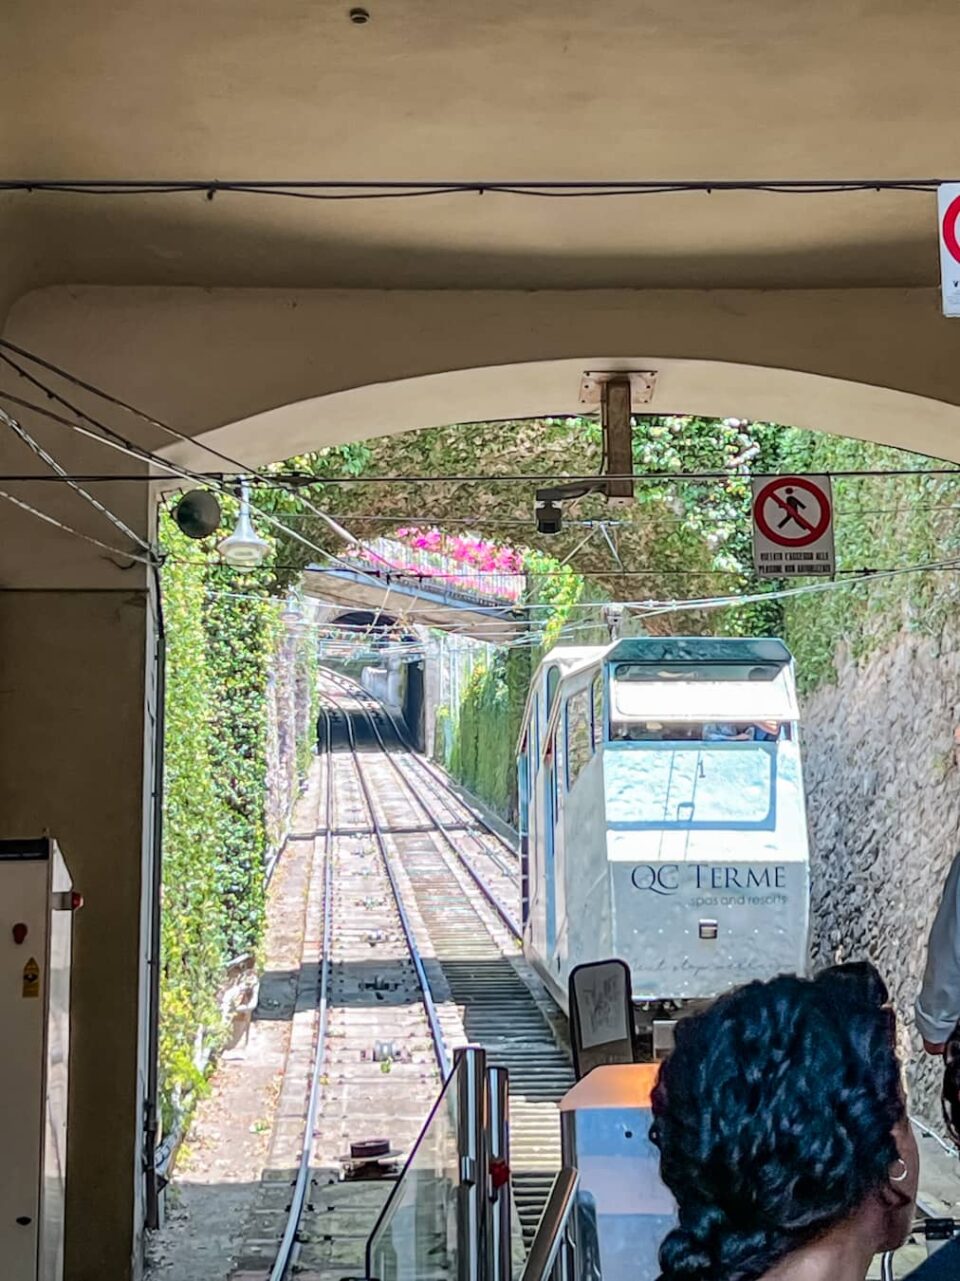 Things to do in Bergamo: Funicular to Bergamo Alta (Upper Town)